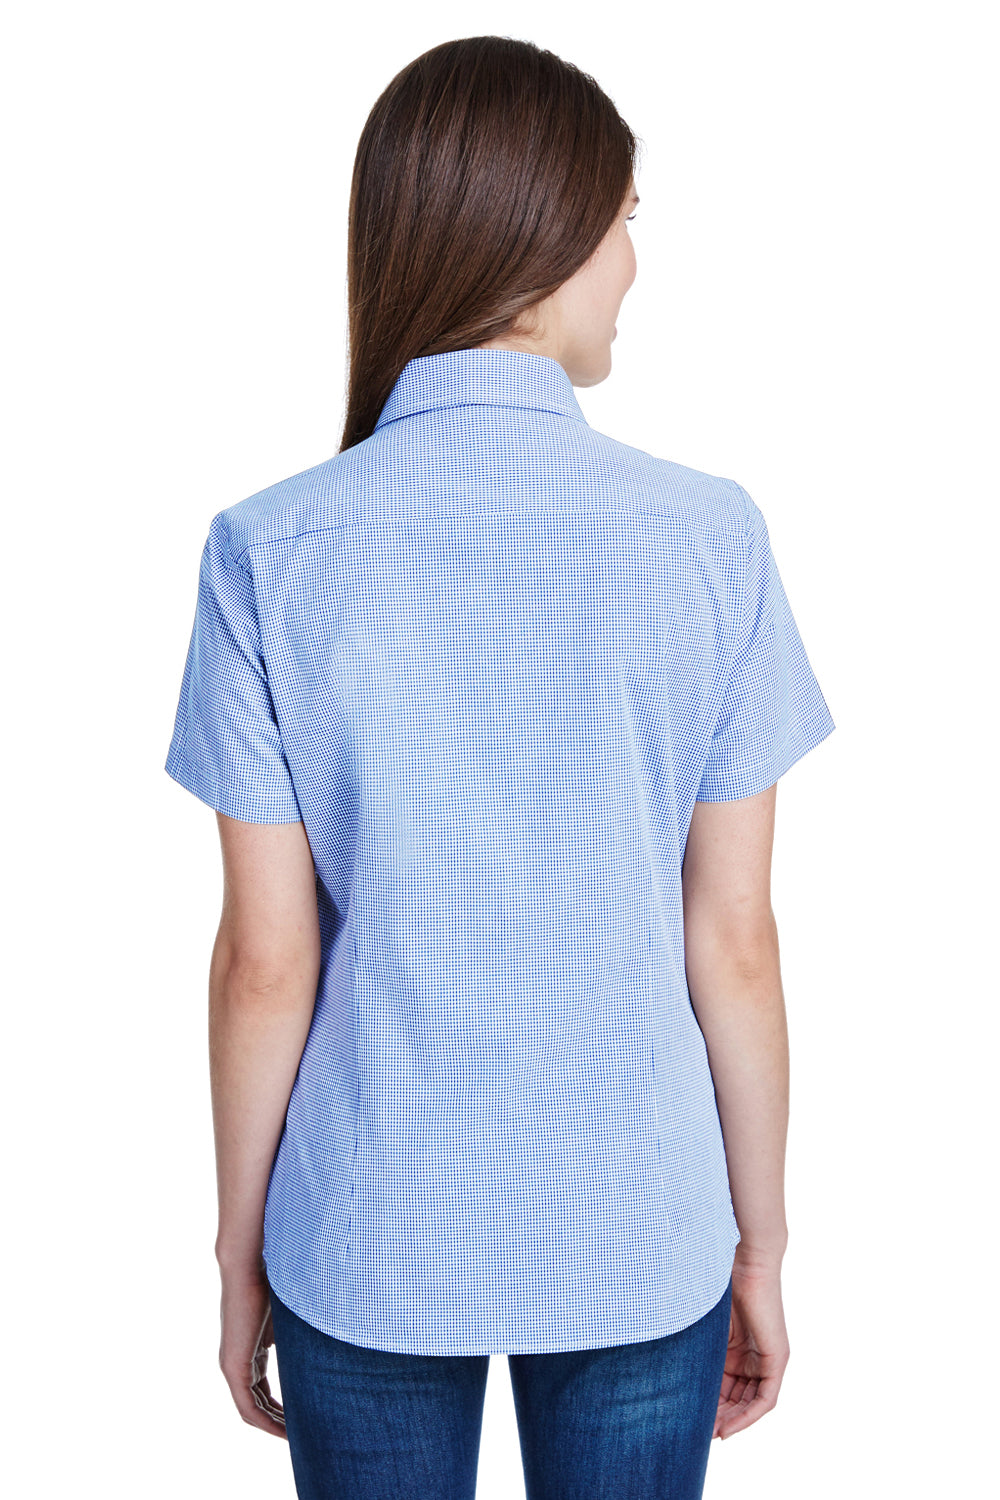 Artisan Collection RP321 Womens Microcheck Gingham Short Sleeve Button Down Shirt Light Blue/White Model Back